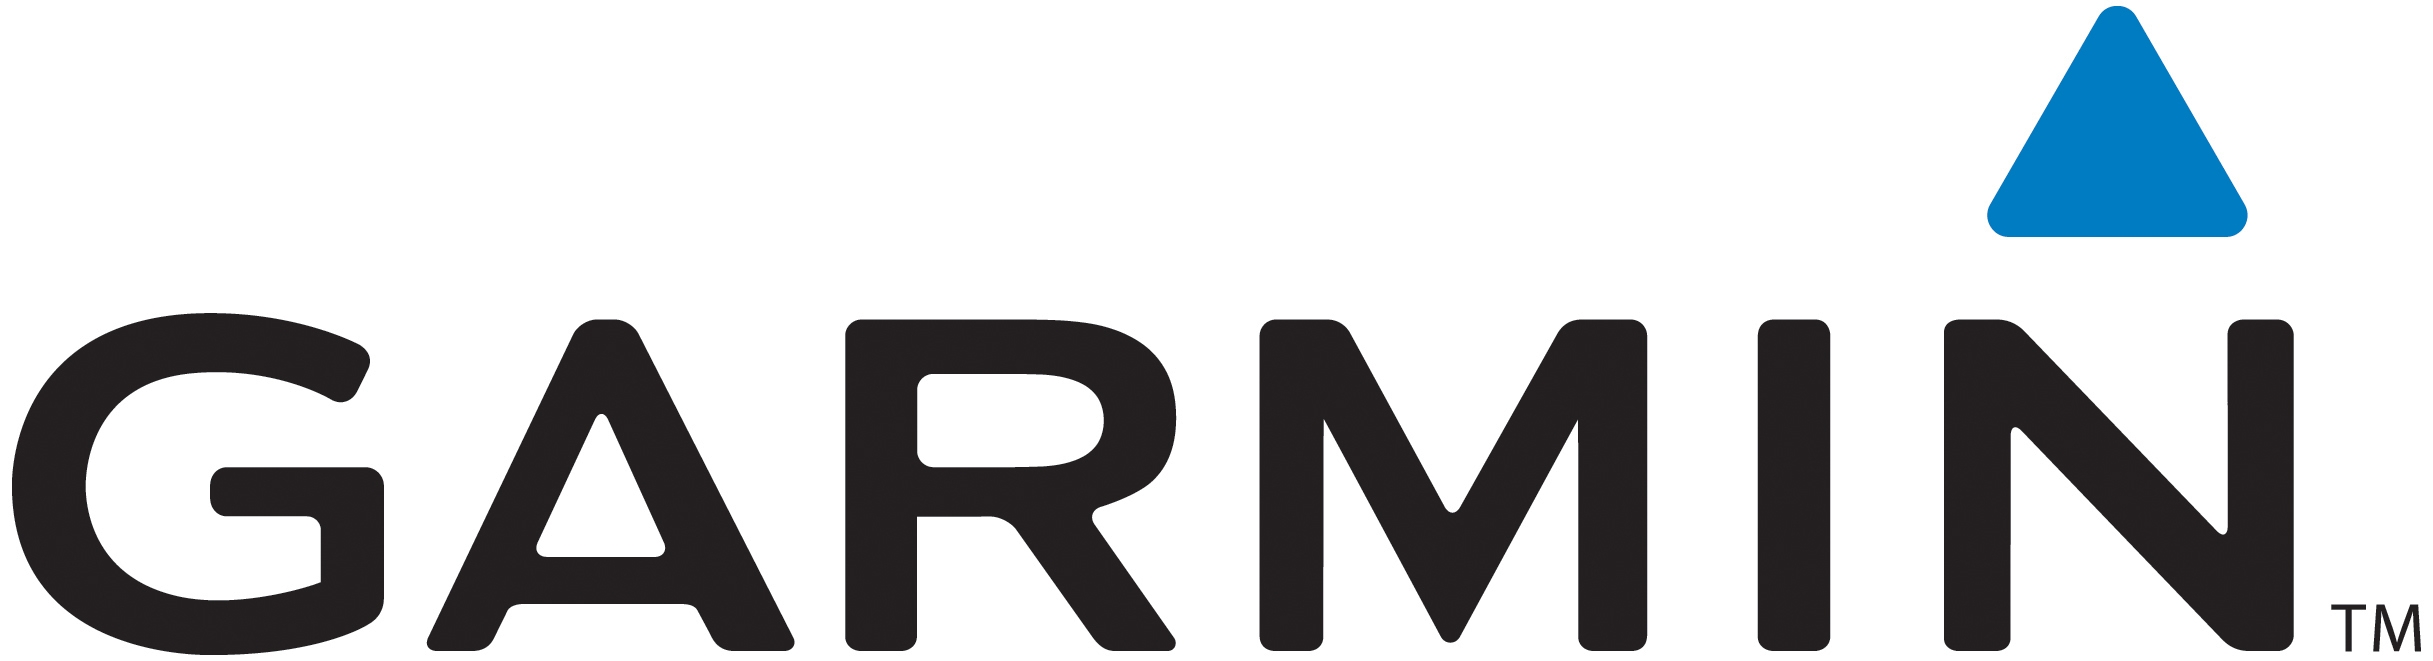 garmin-logo1.jpg